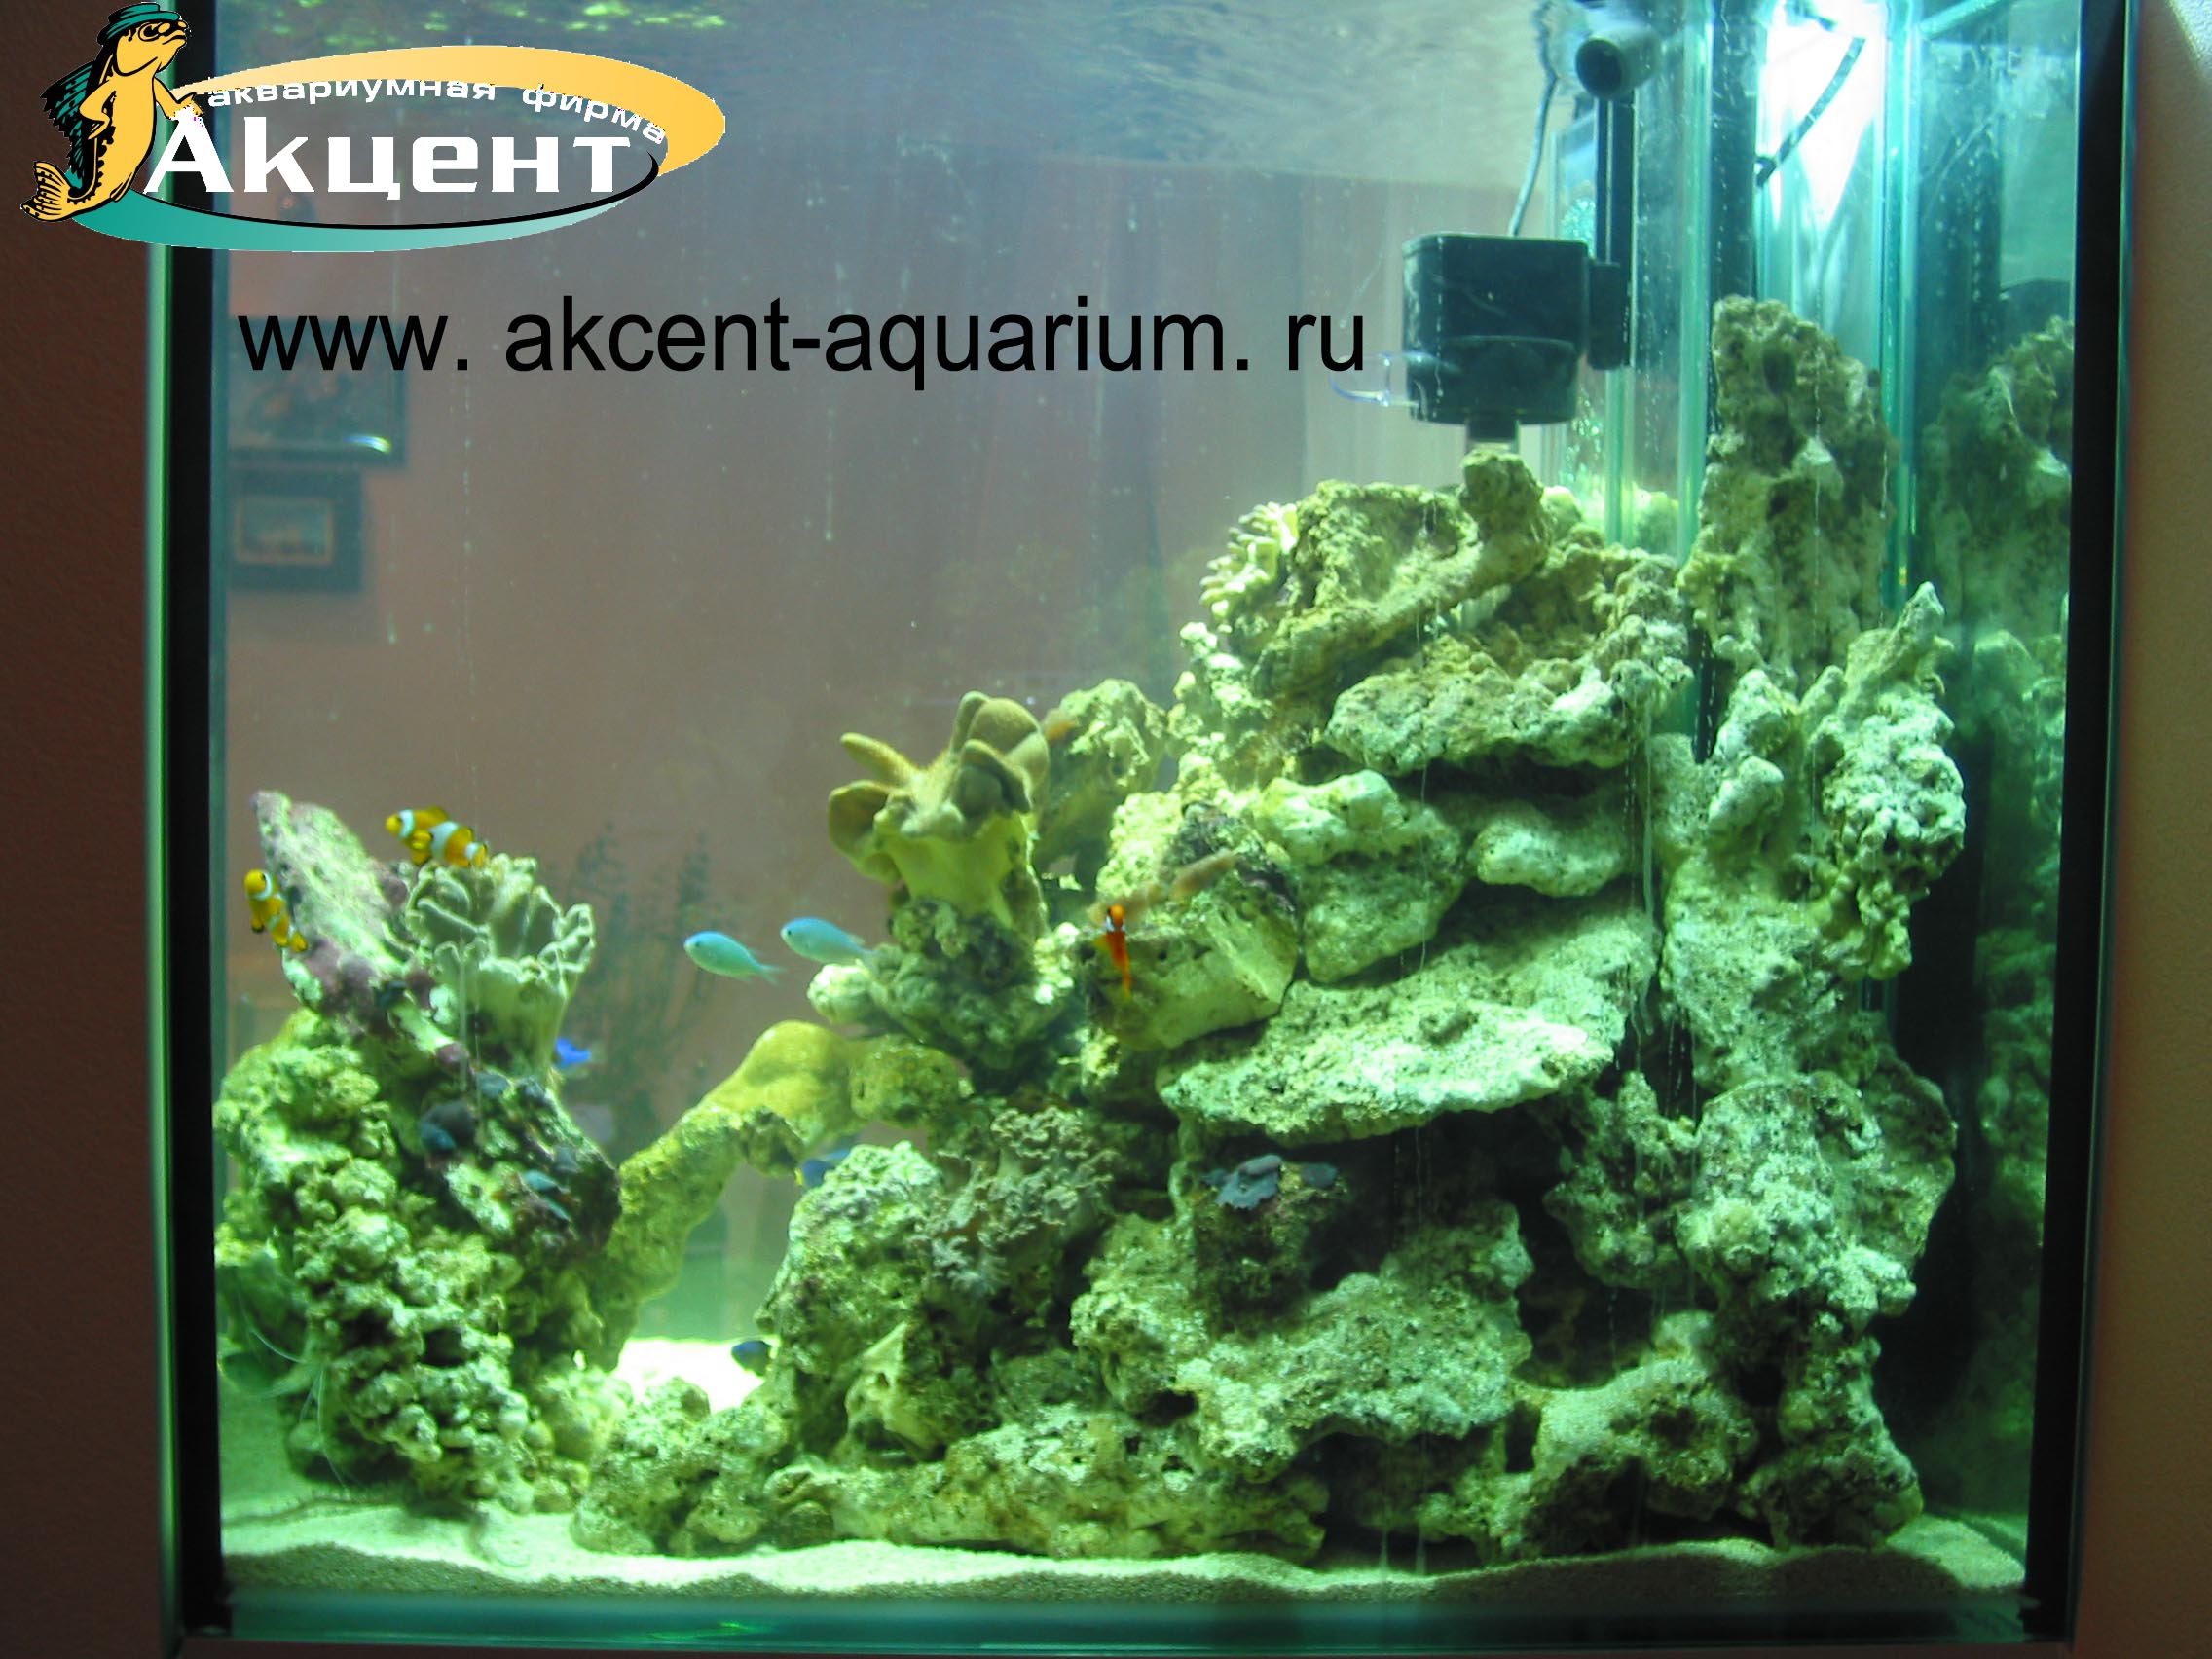 Акцент-аквариум, морской аквариум 400 литров, живые камни, кораллы